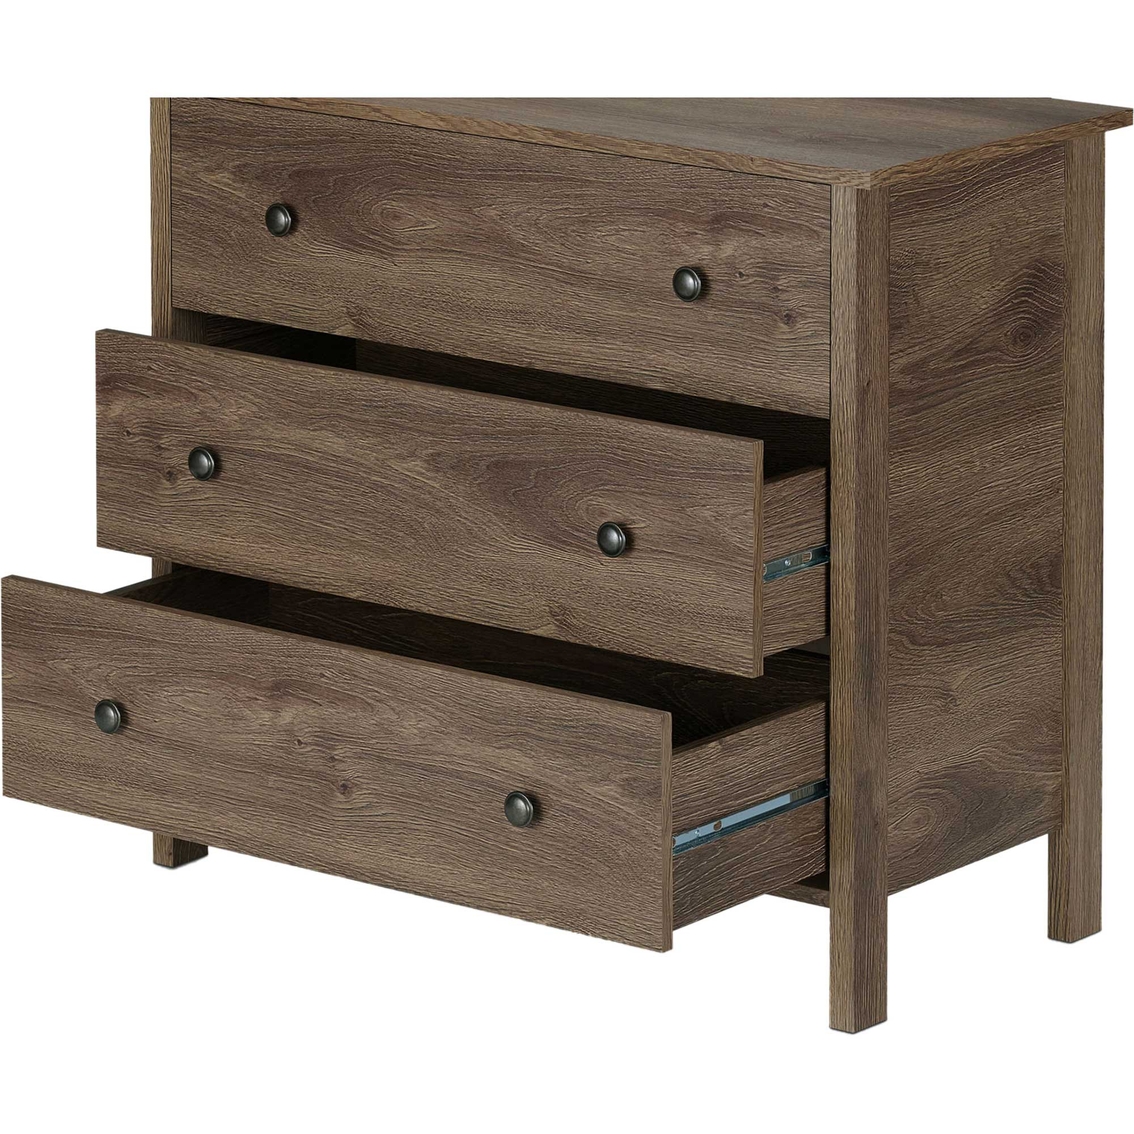 Furniture of America Reyes Rustic Wood 3 Drawer Dresser - Image 2 of 2